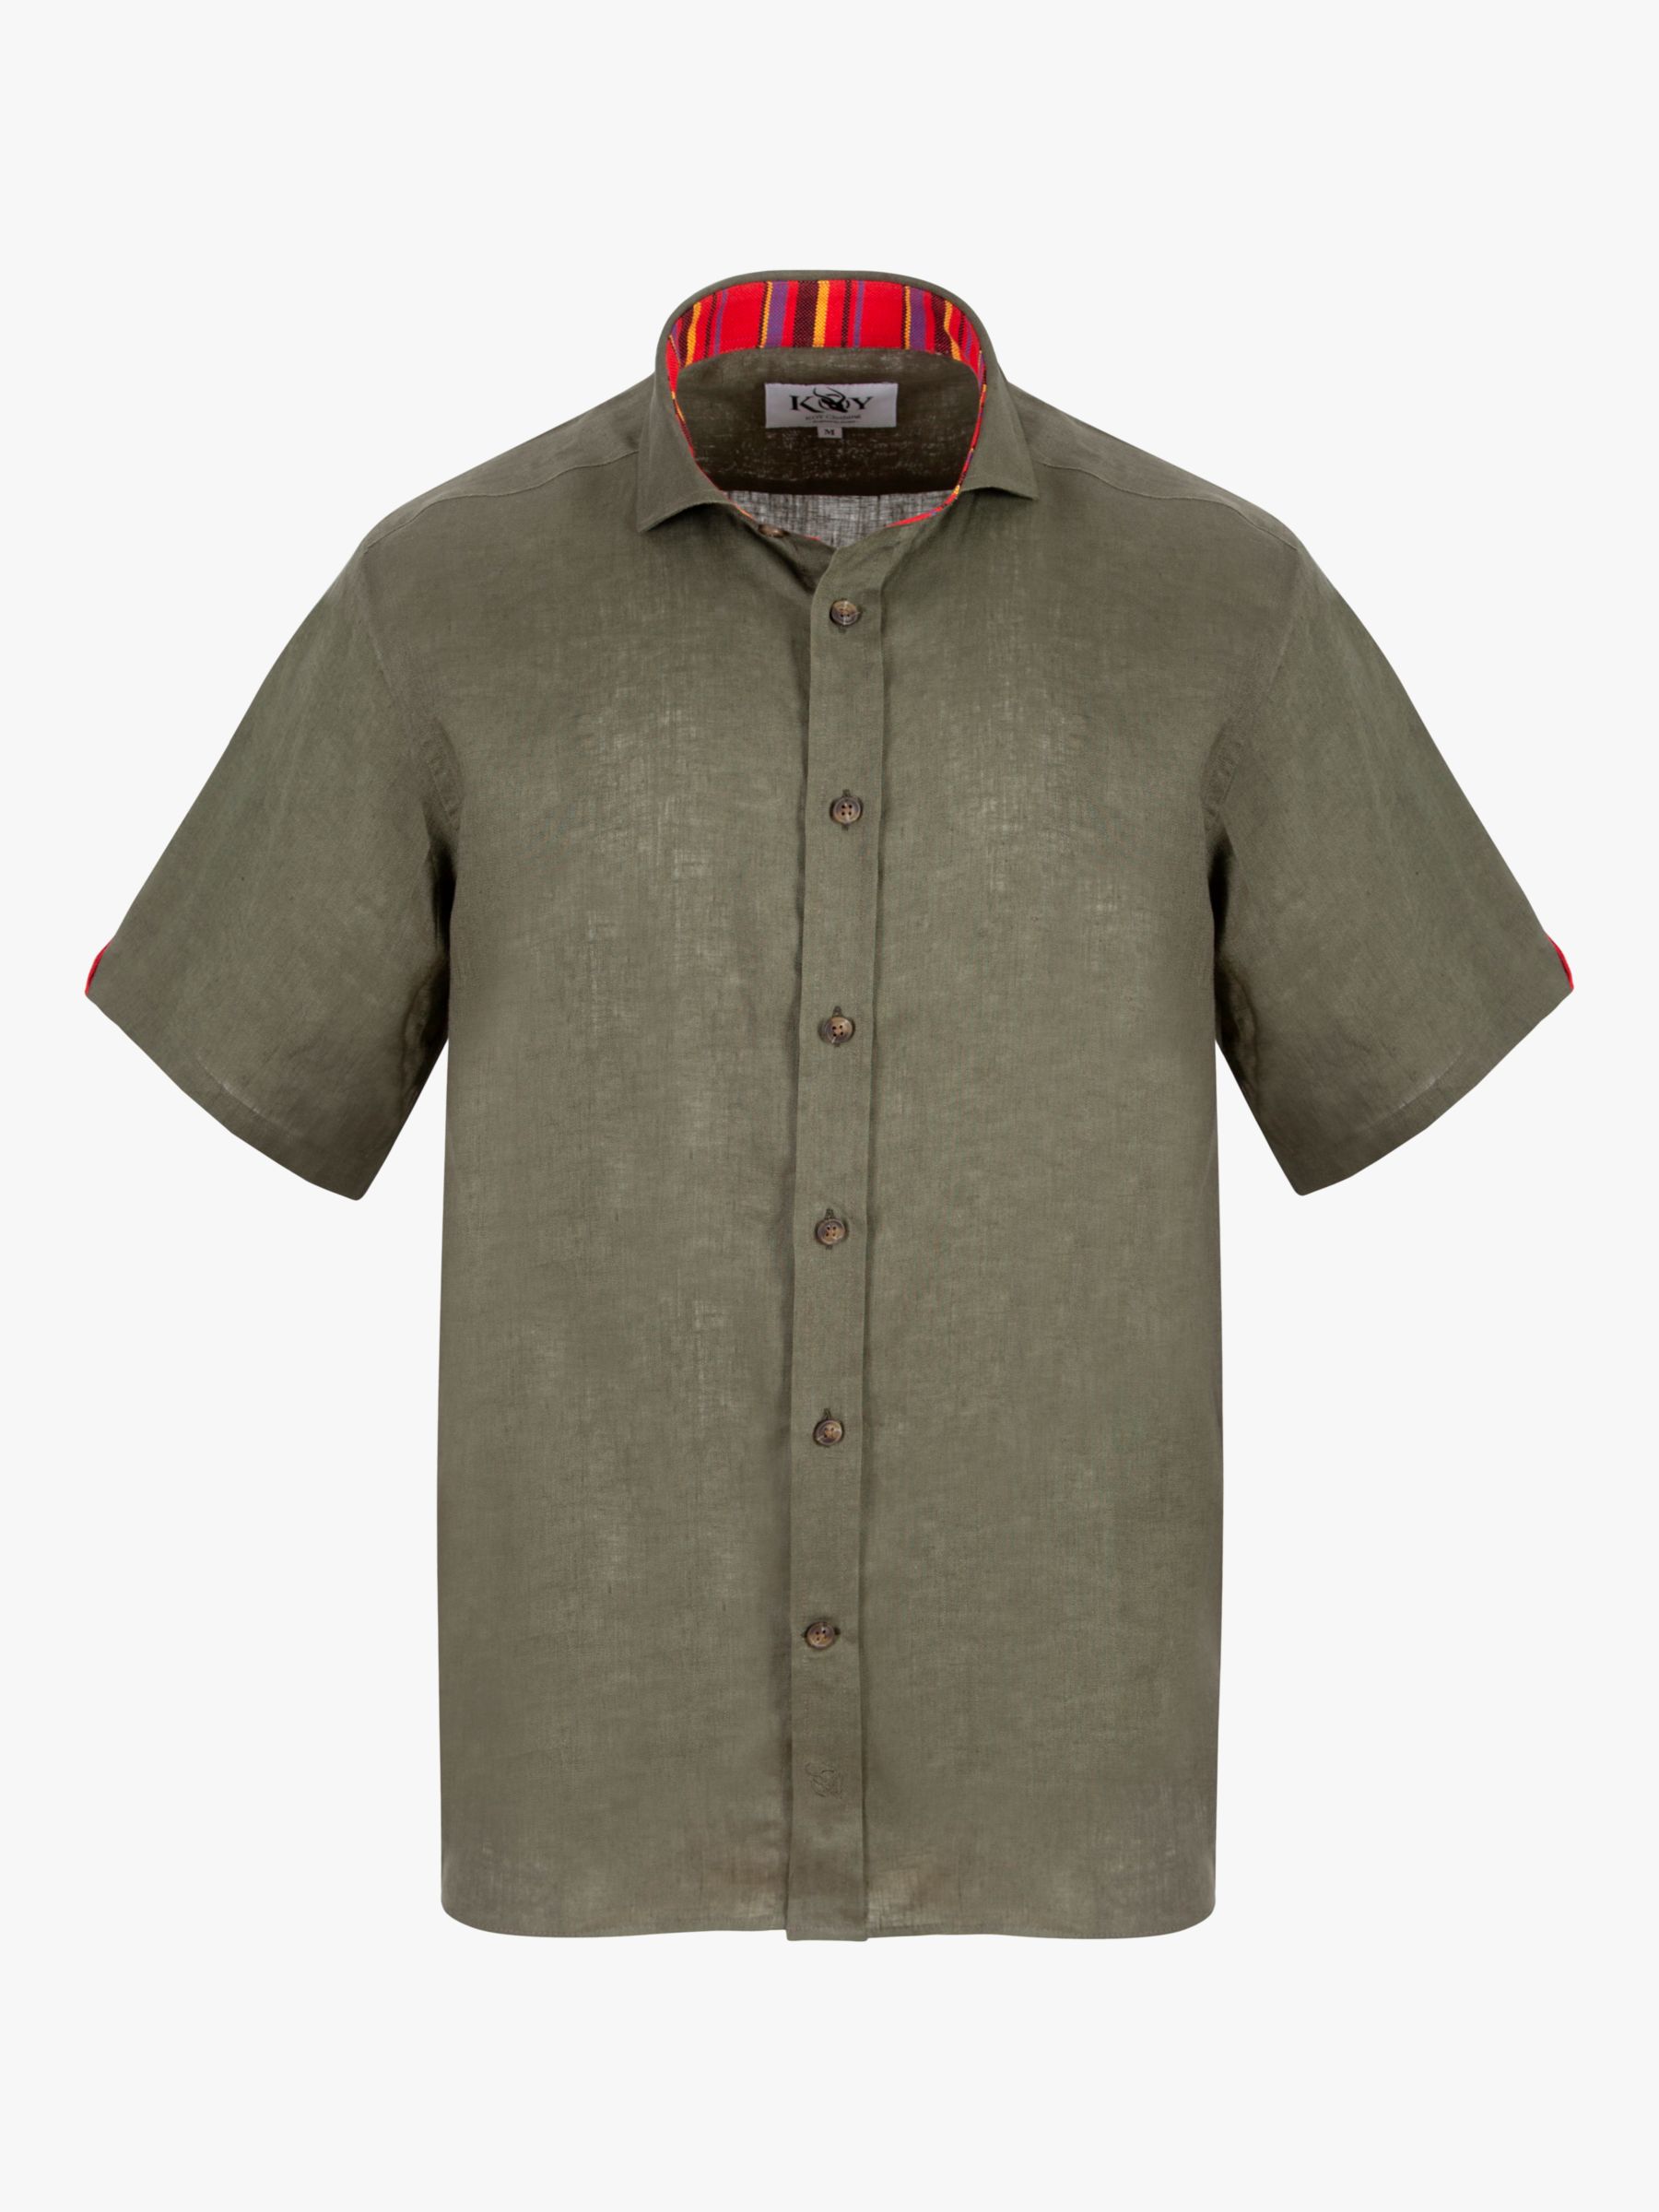 KOY Short Sleeve Linen Shirt, Green Khaki, M